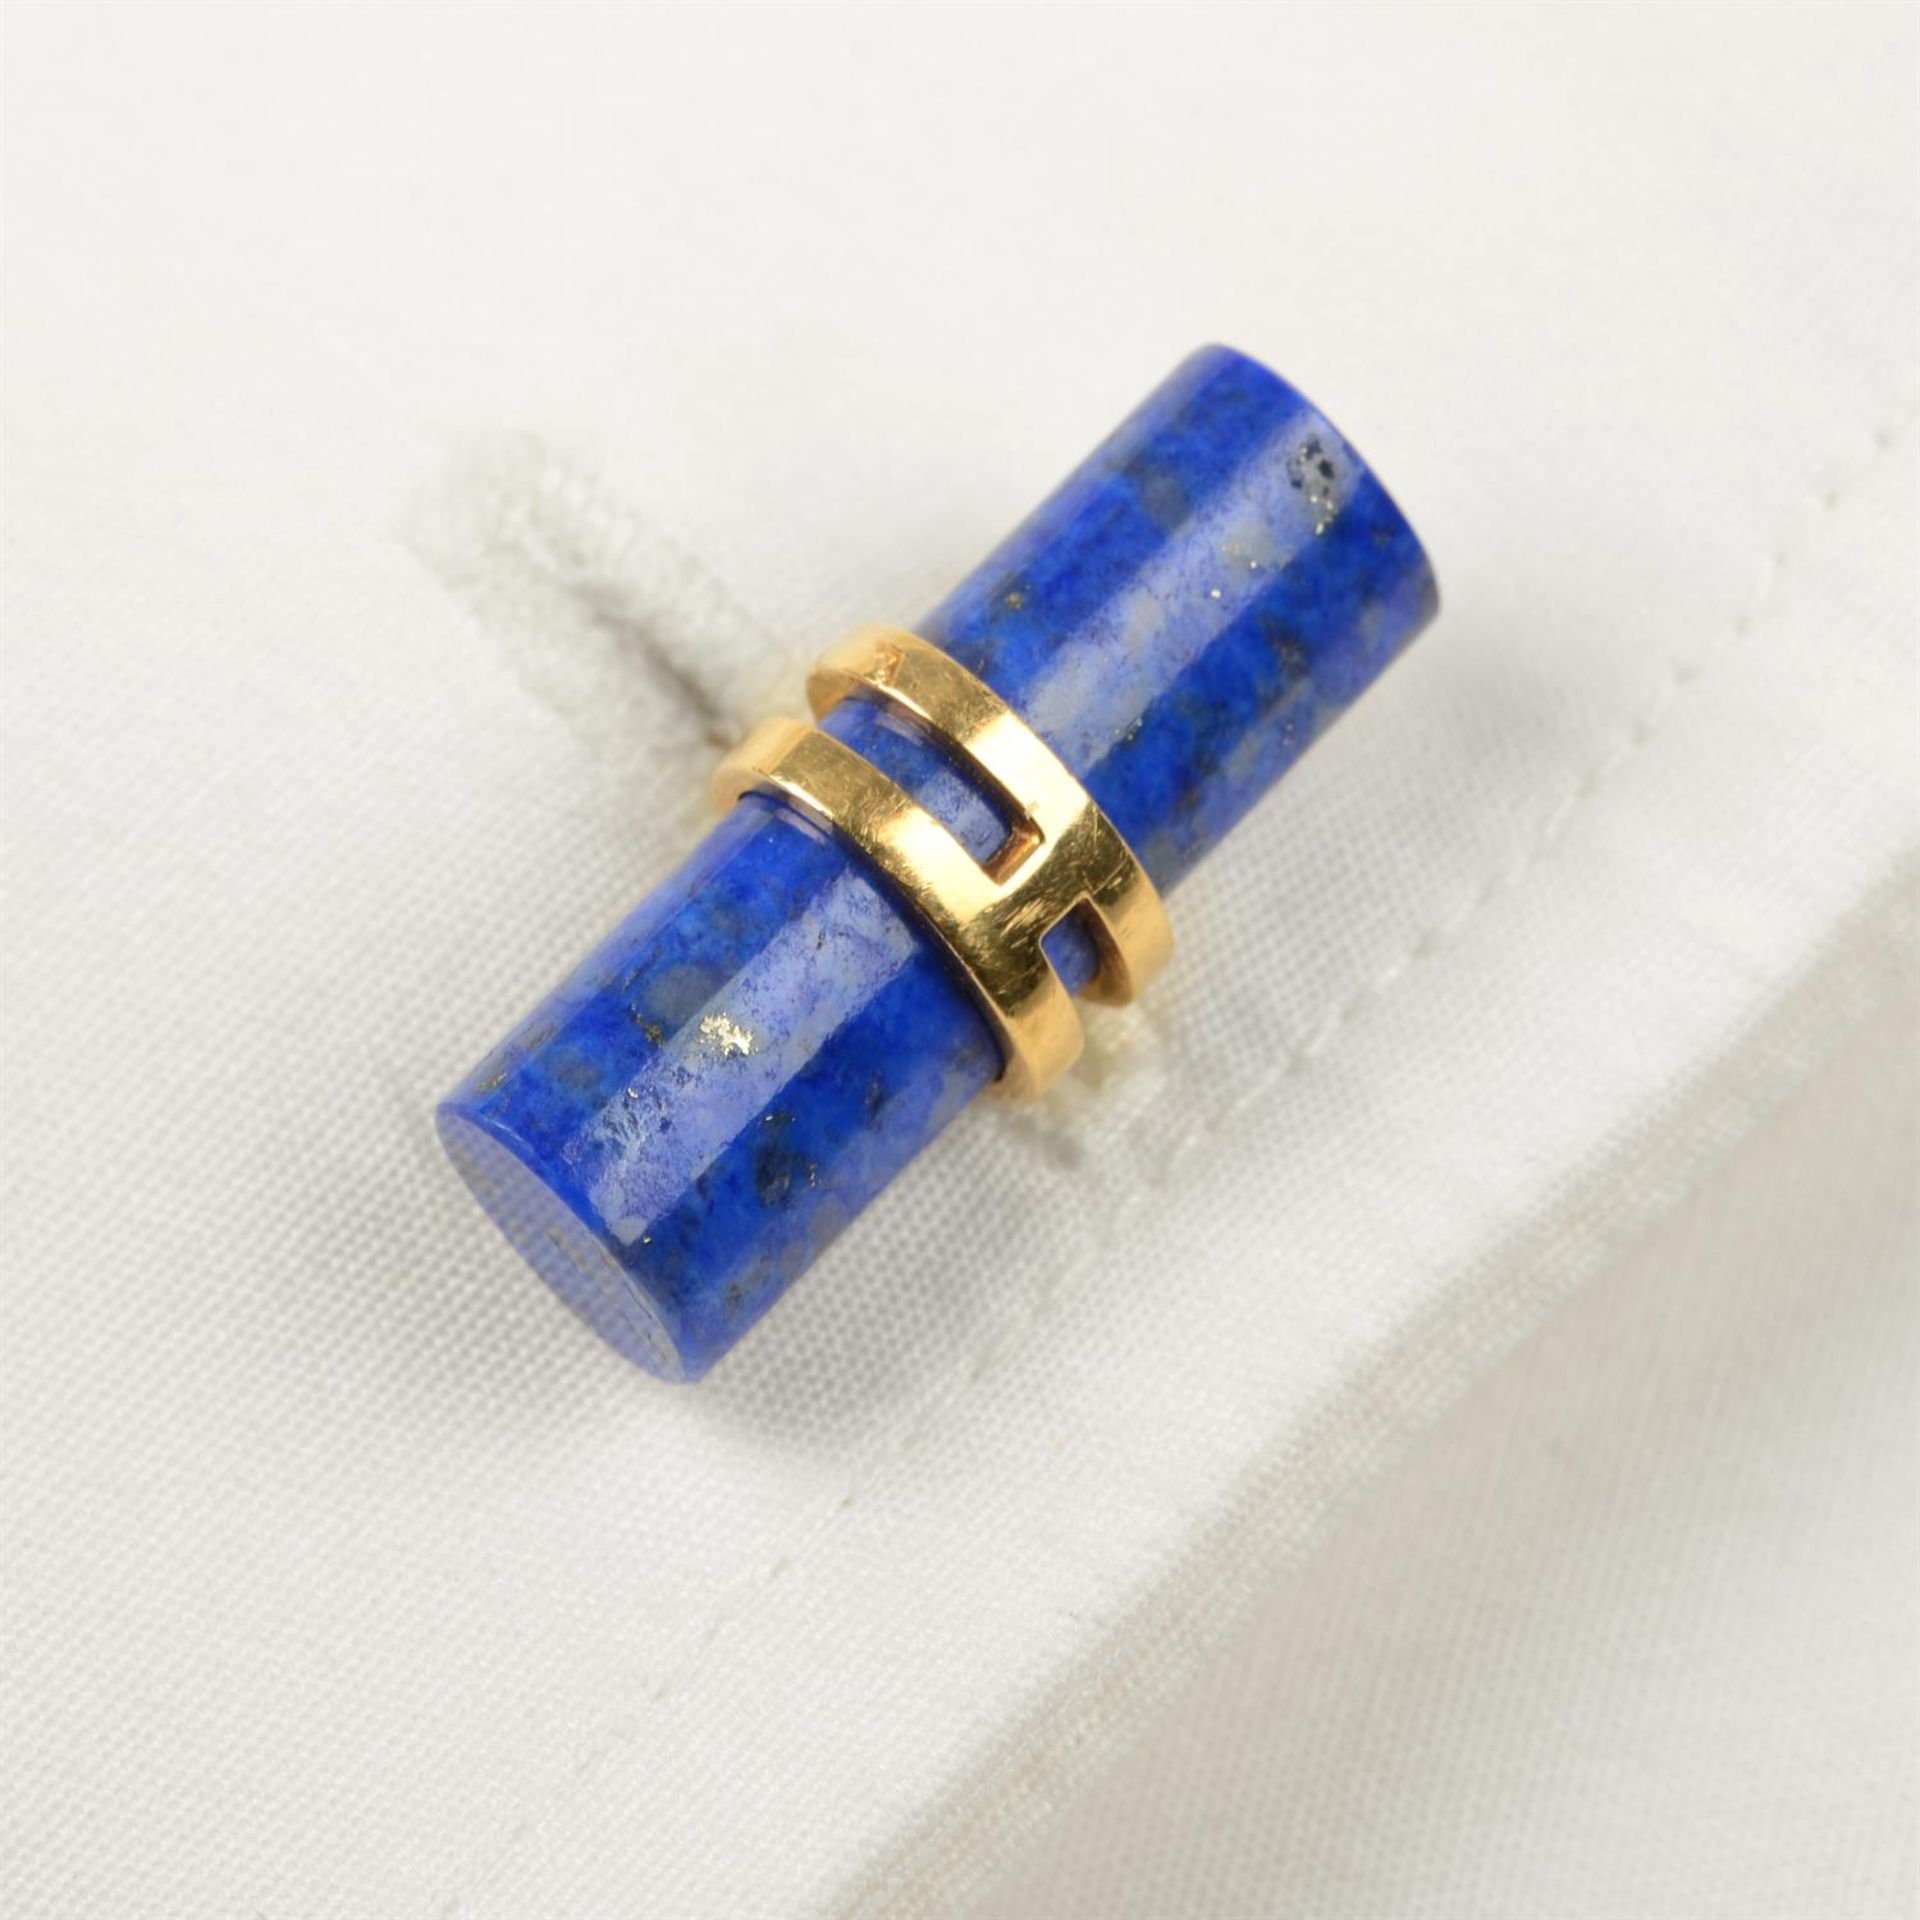 A pair of lapis lazuli cufflinks, by Hermès.